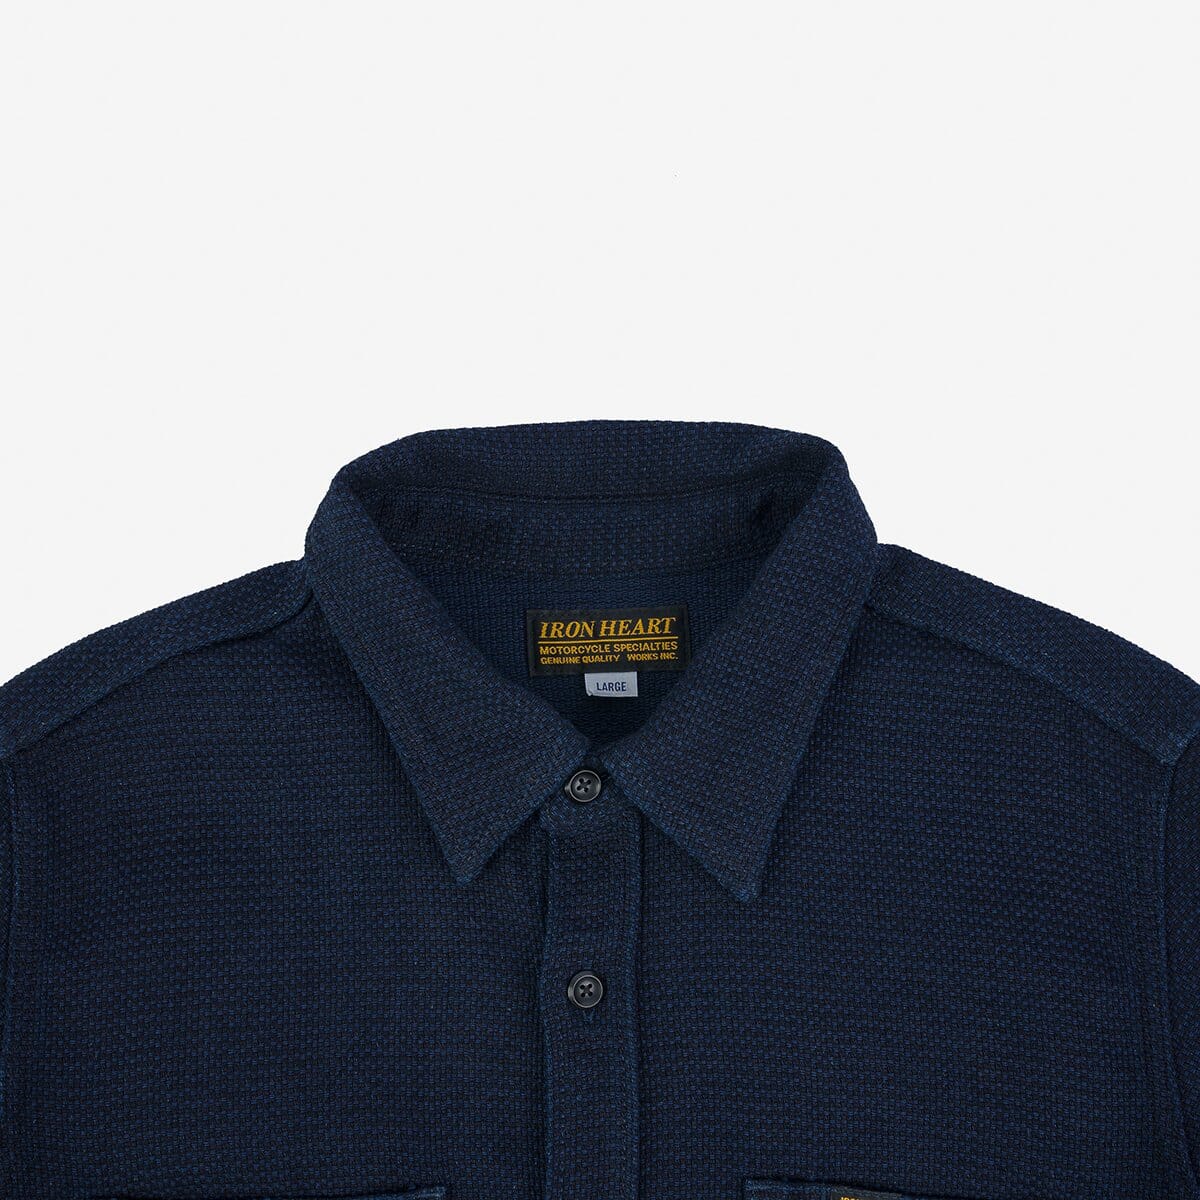 Iron Heart - IHSH-380-IND - 12oz Dobby Cloth Work Shirt - Indigo - City Workshop Men's Supply Co.